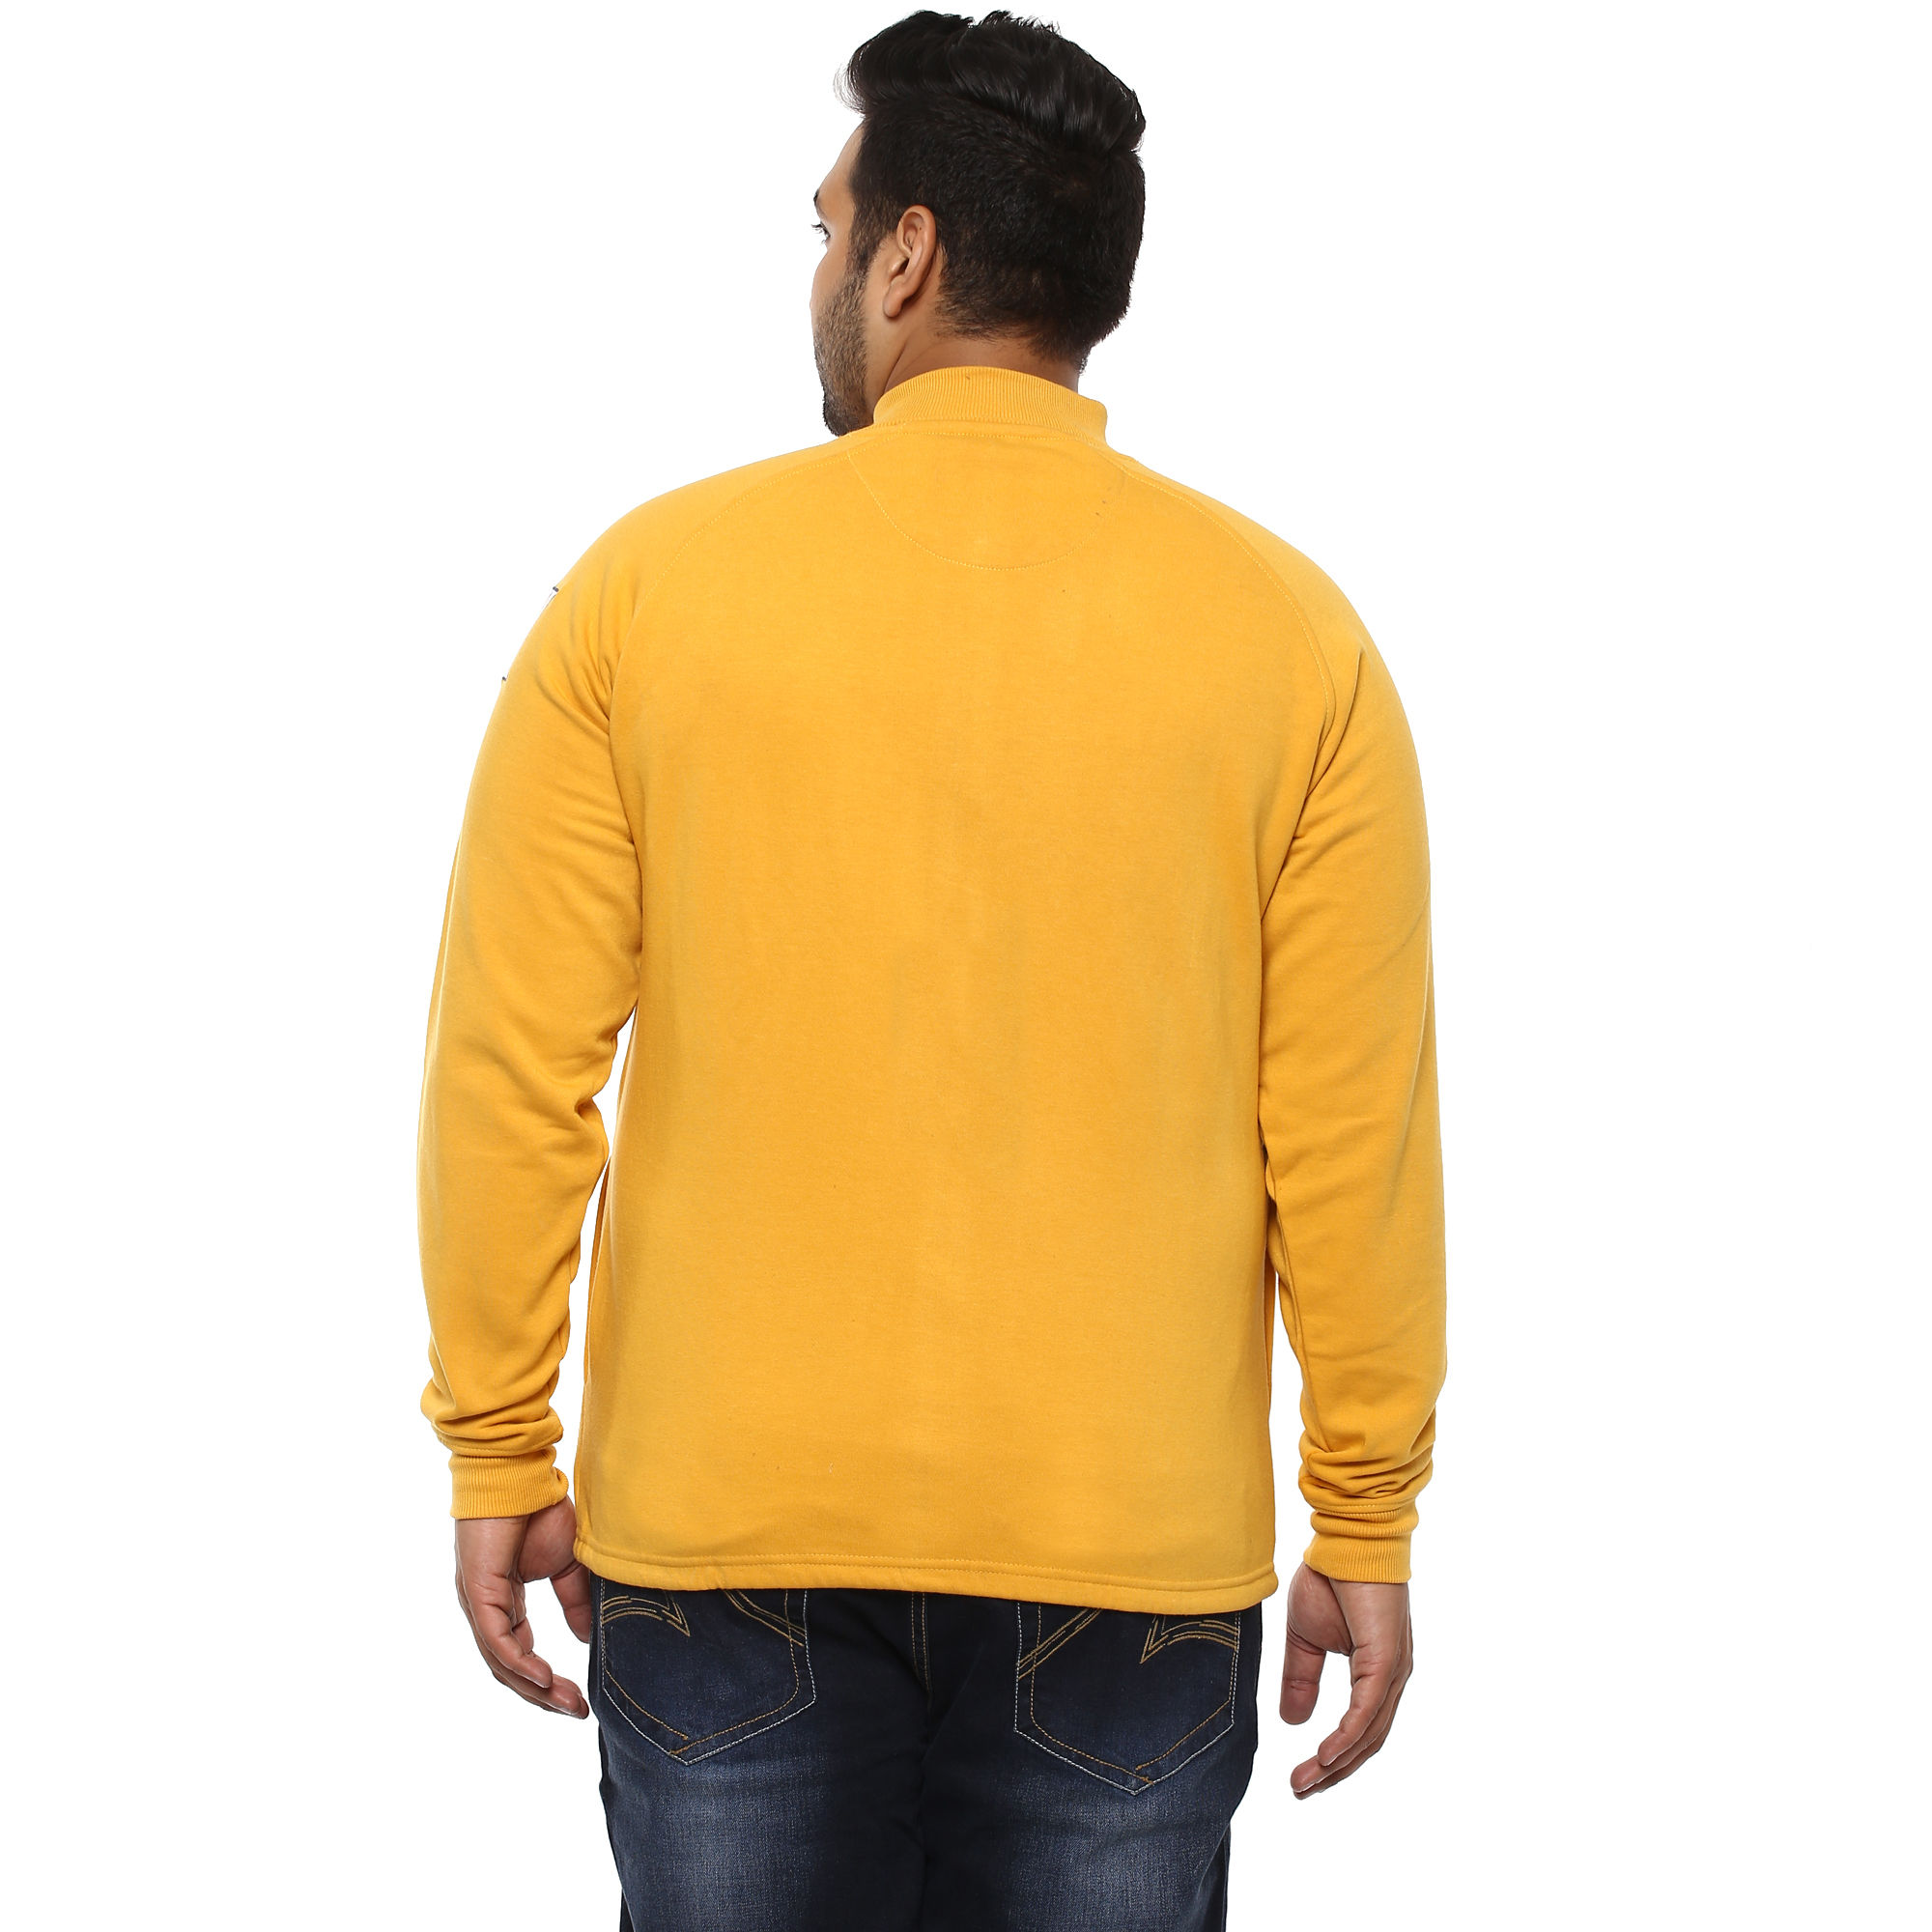 John Pride  Yellow  Sweatshirt